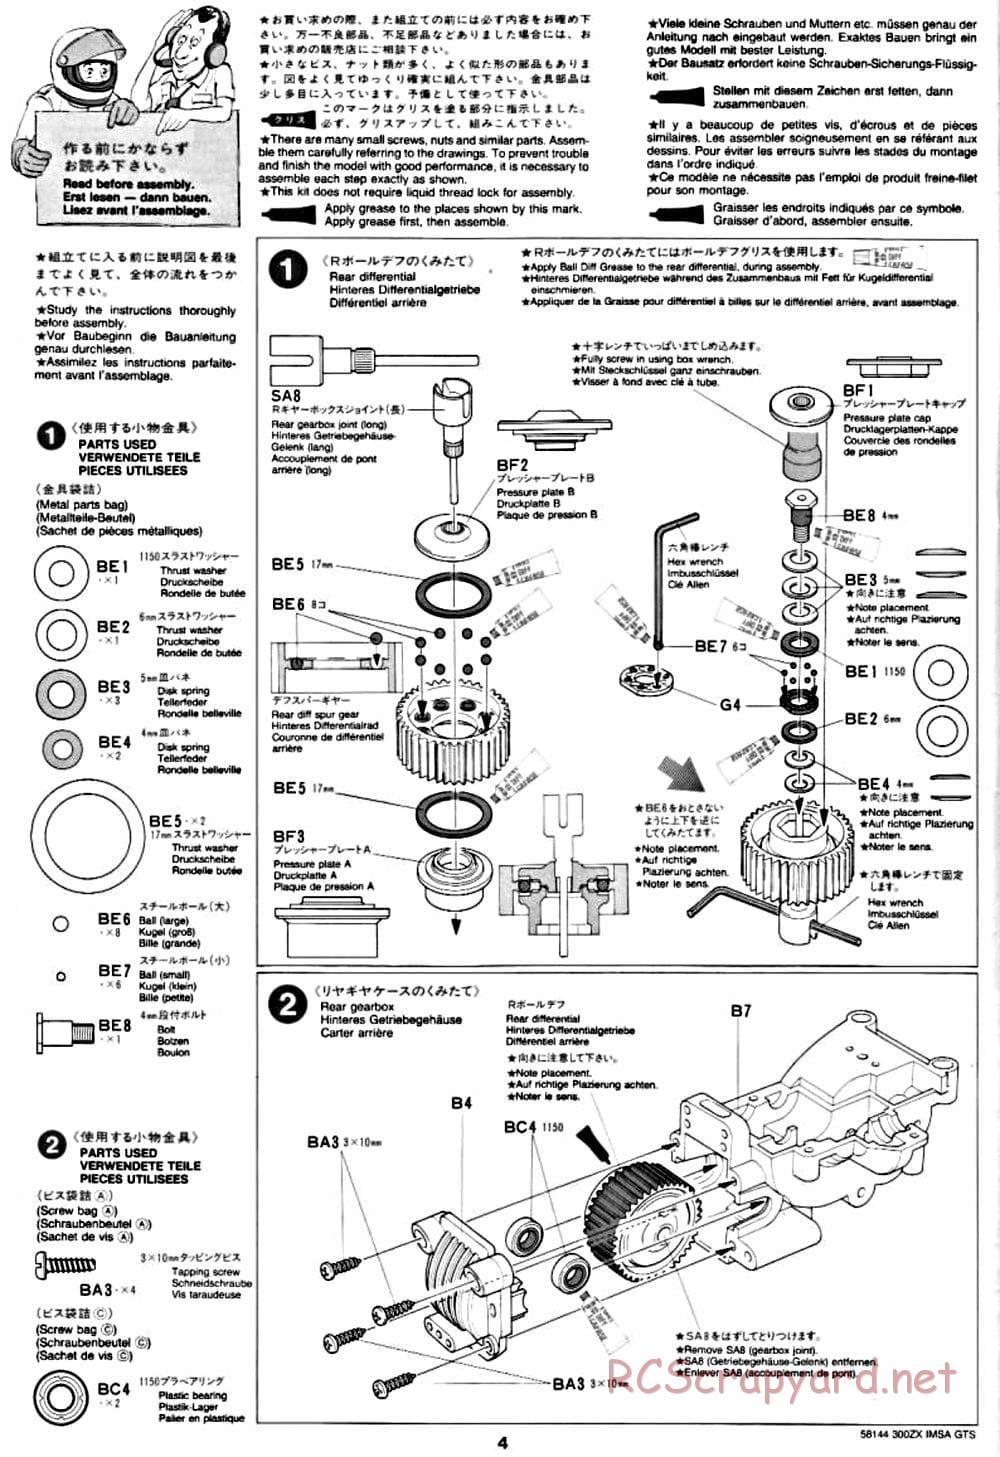 Tamiya - Nissan 300ZX IMSA-GTS - TA-02W Chassis - Manual - Page 4